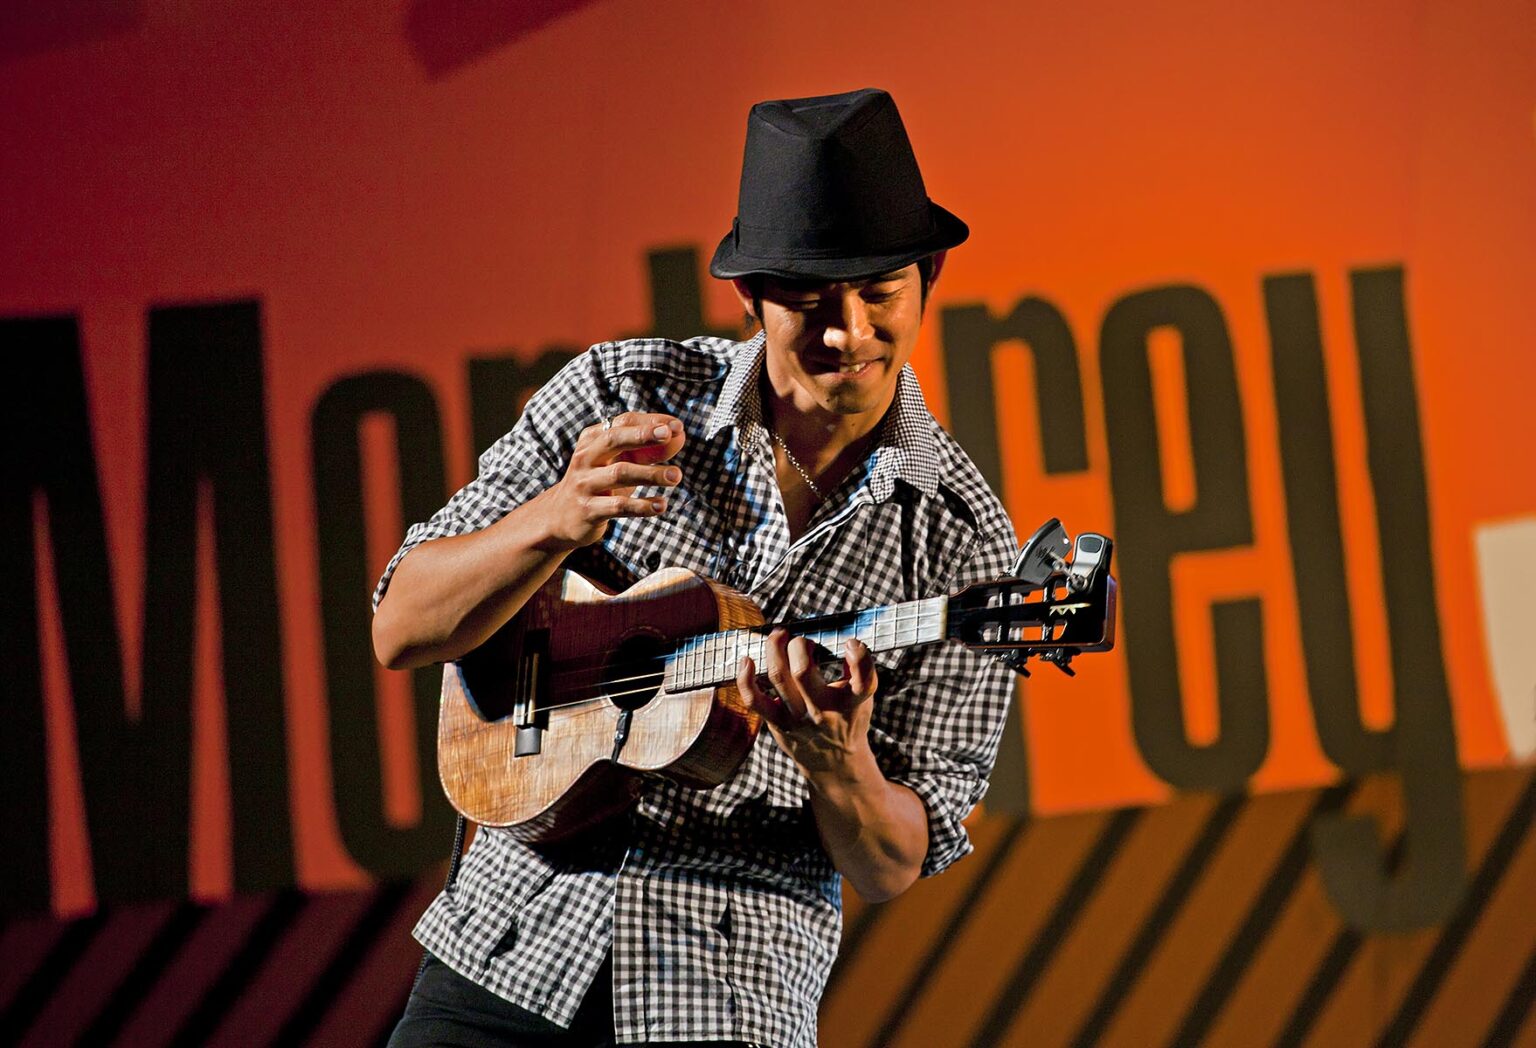 JAKE SHIMABUKURO plays guitar and sings on the Garden Stage - 2010 MONTEREY JAZZ FESTIVAL, CALIFORNIA